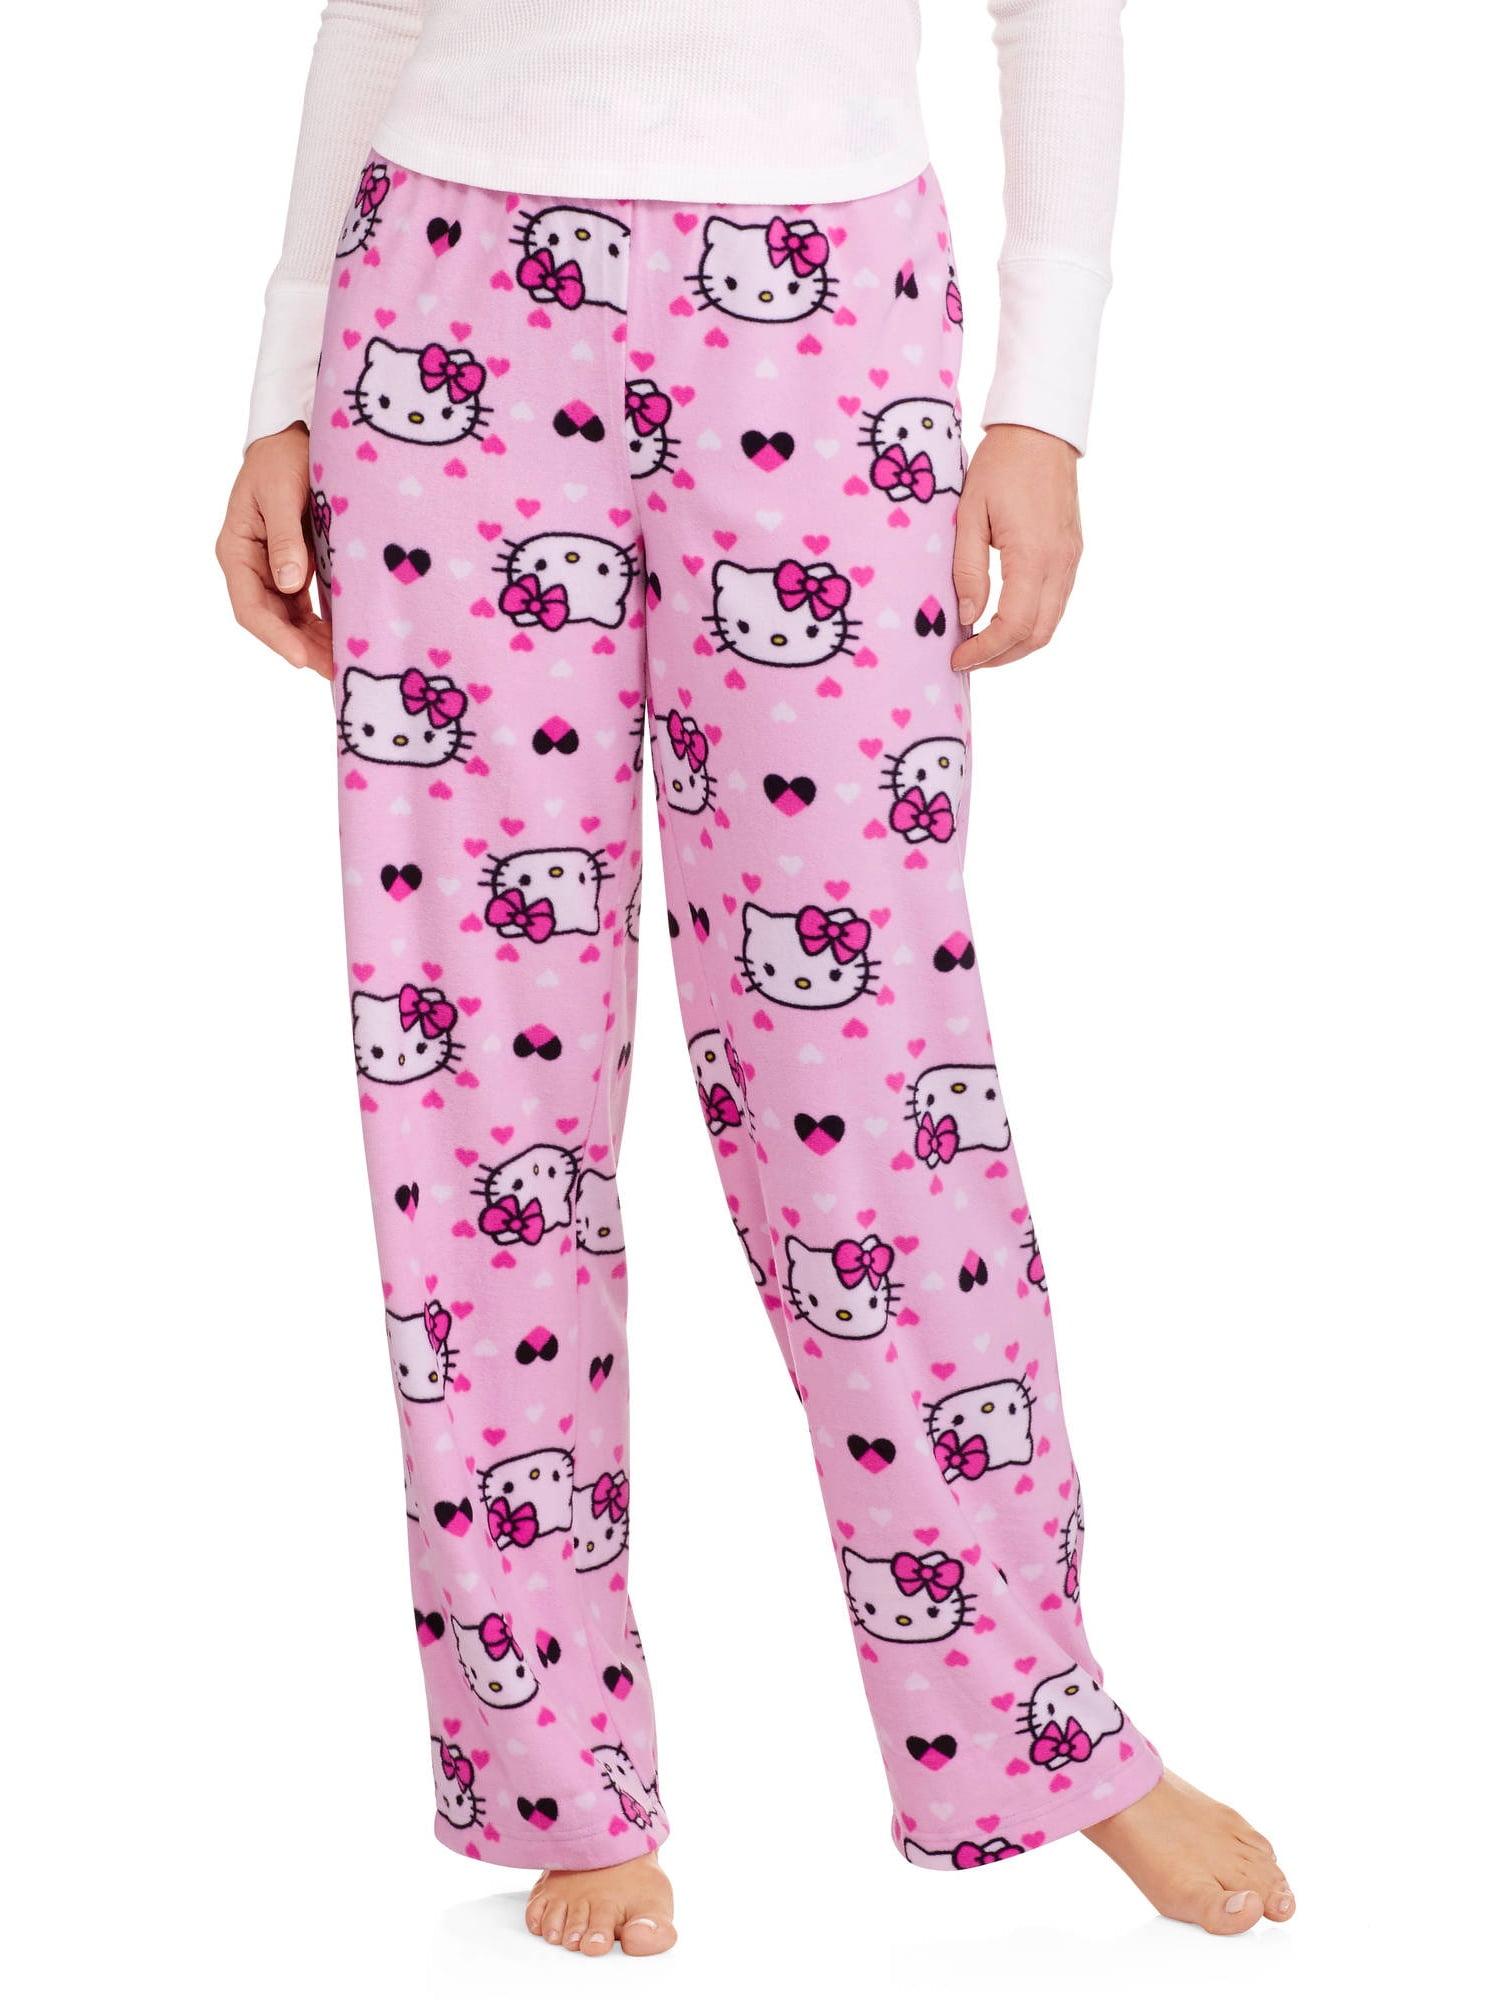  Hello  Kitty  Women s Women s Plus Fleece Sleep Pants  